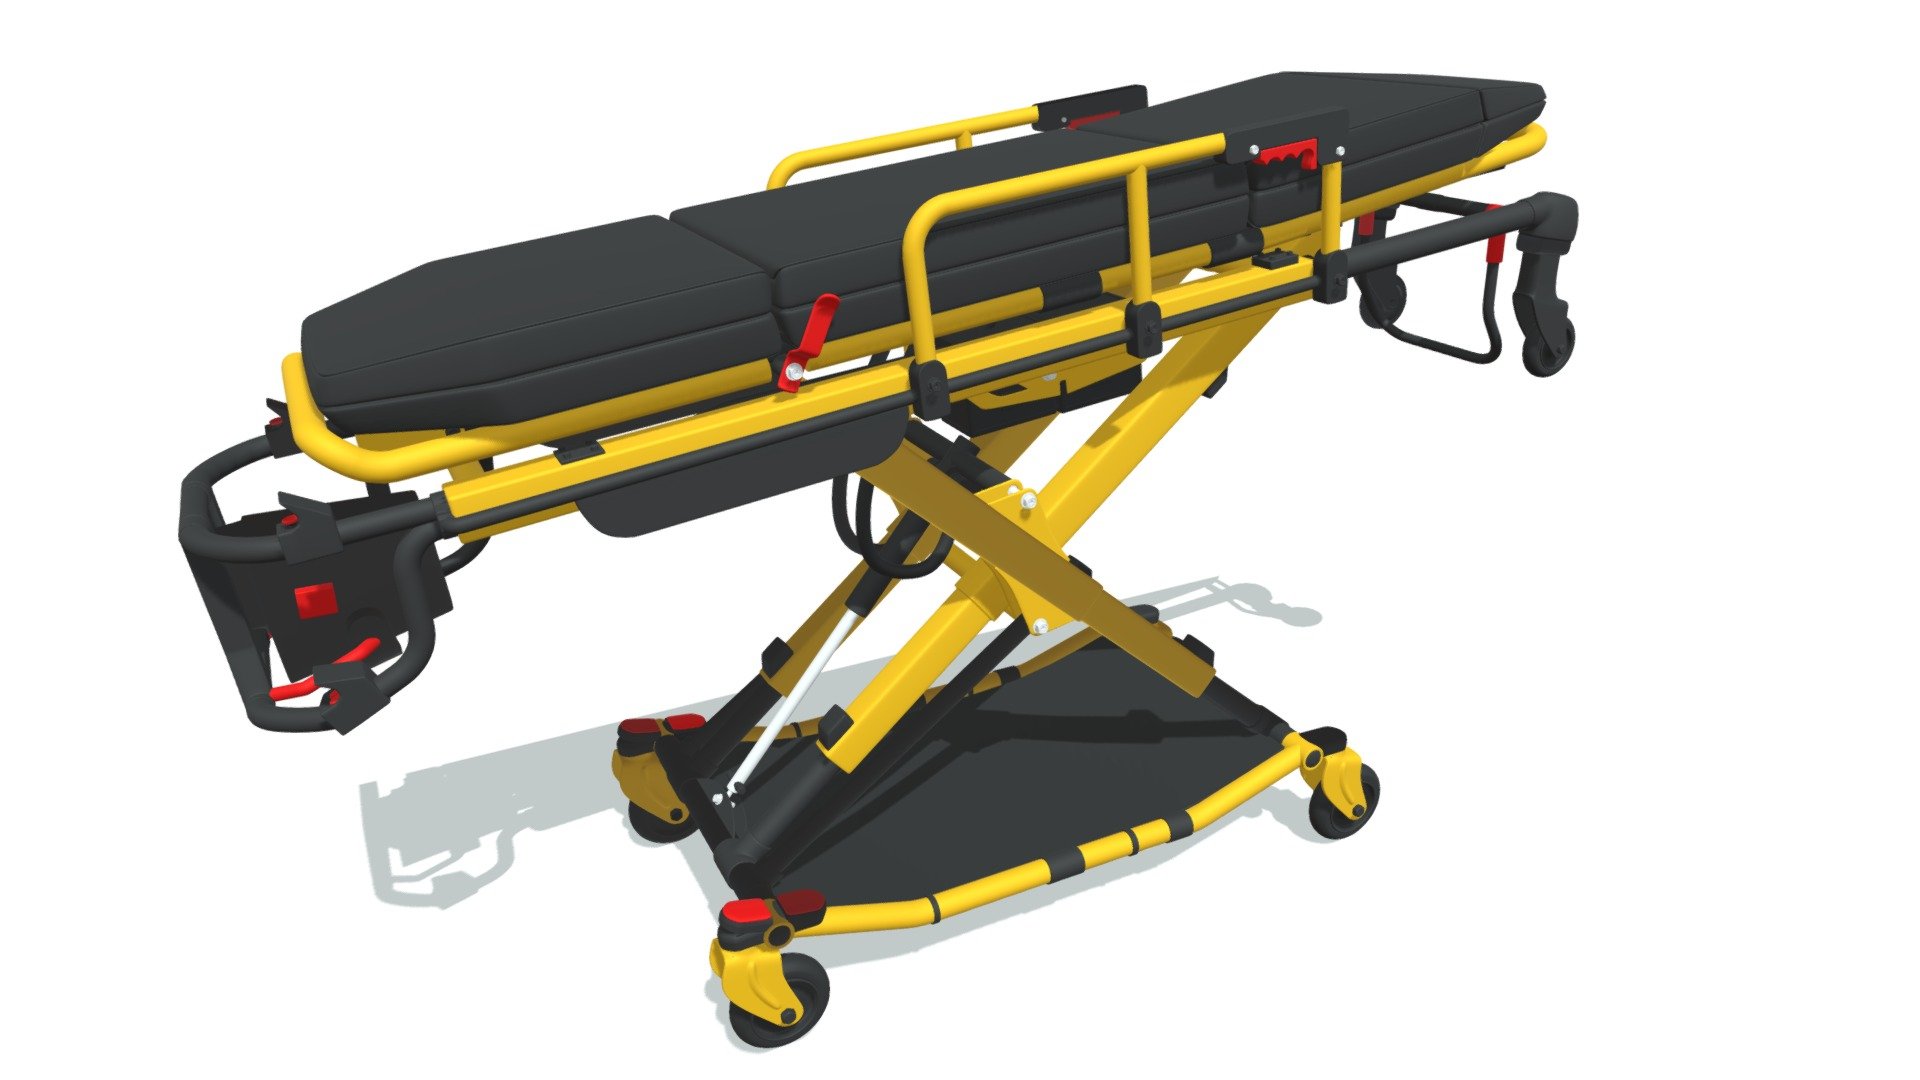 High quality 3d model of ambulance stretcher trolley 3d model